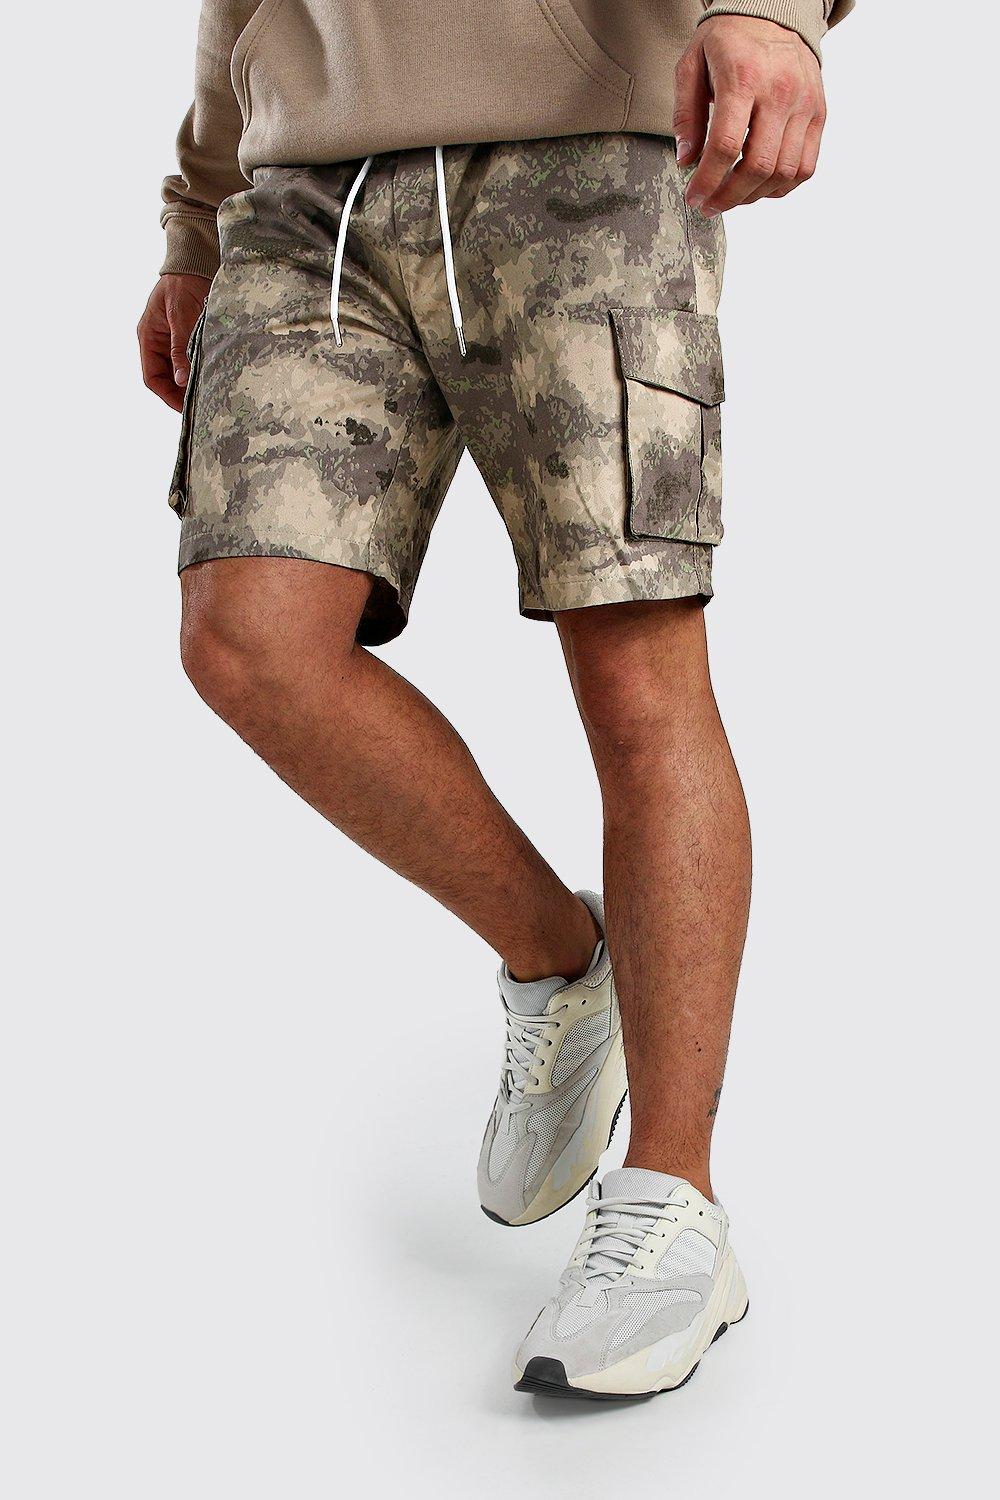 HTOOHTOOH Mens Elastic Waist Straight Leg Slim Camouflage Printed Sport Shorts 